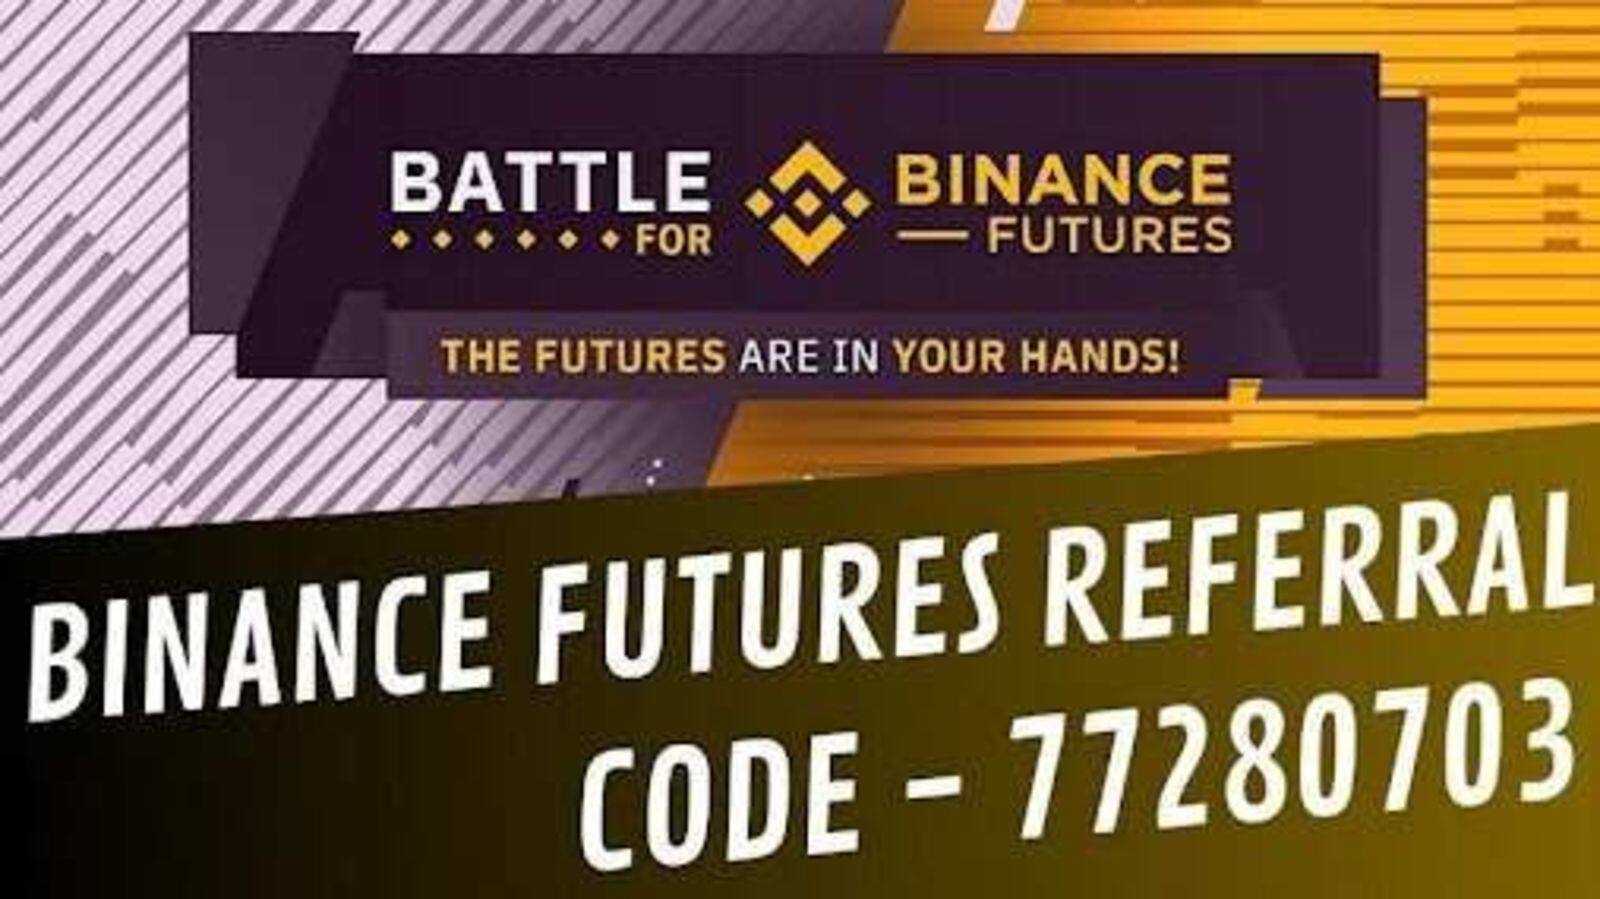 Binance Futures Referral Code Free $ and 40% Bonus - 